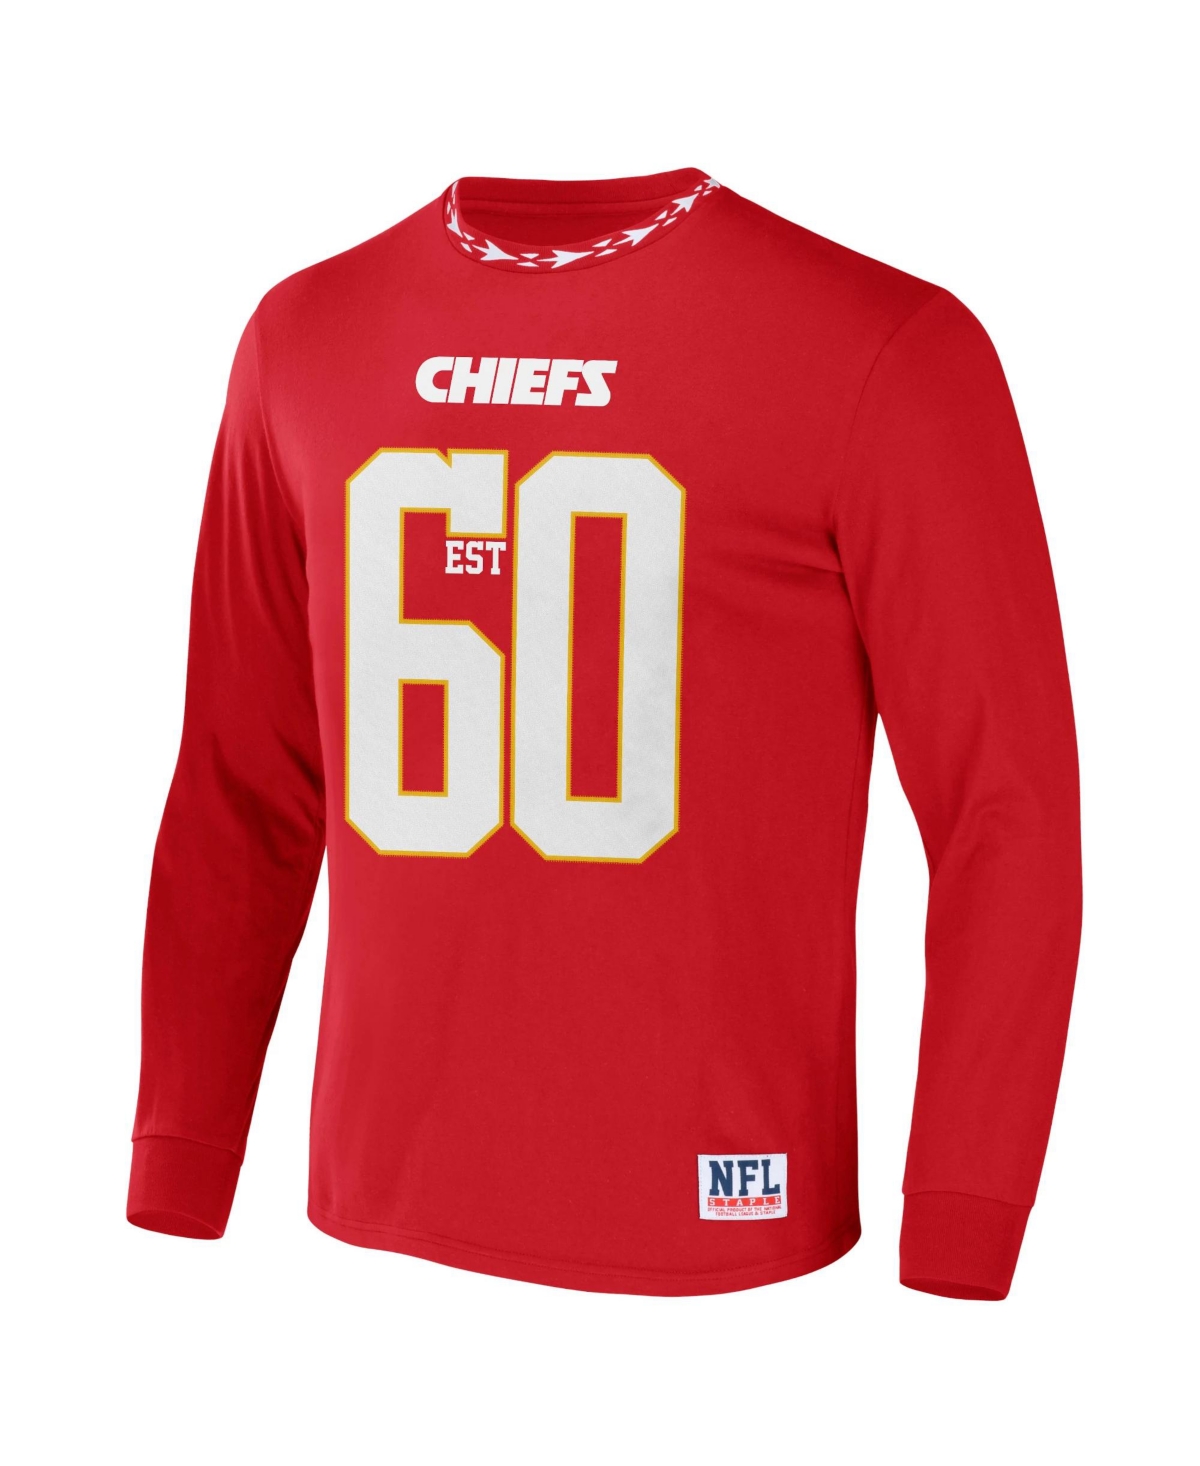 Shop Nfl Properties Men's Nfl X Staple Red Kansas City Chiefs Core Long Sleeve Jersey Style T-shirt